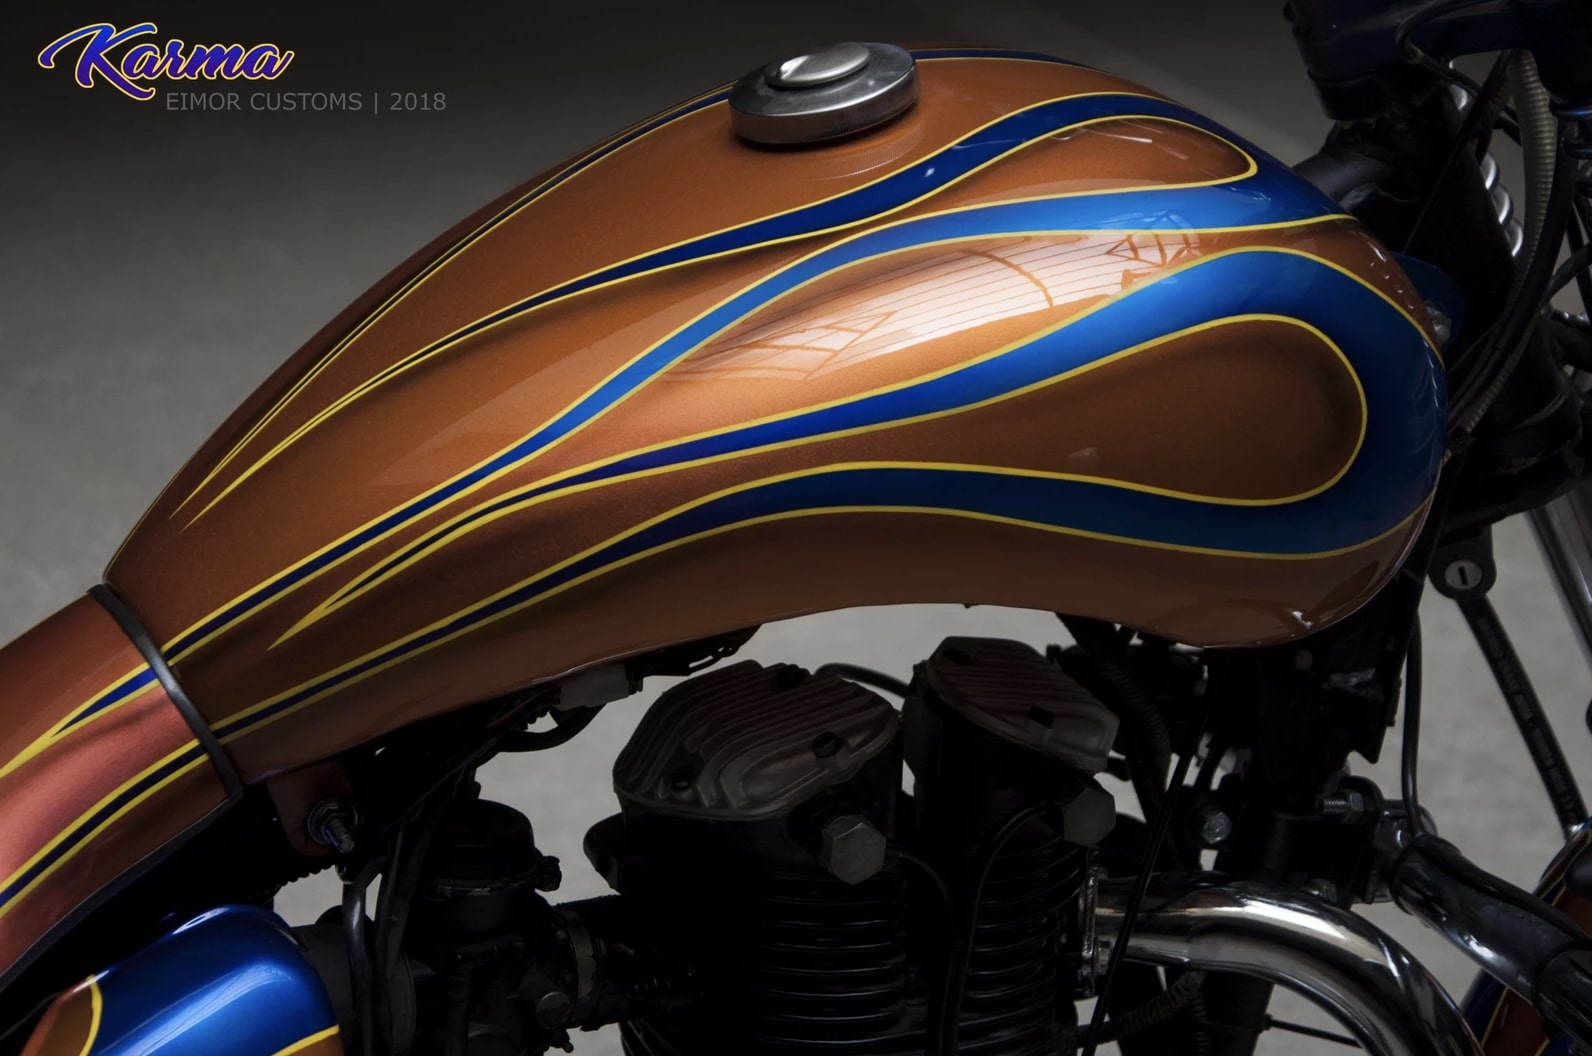 Meet Karma 350 - Based on the Royal Enfield Thunderbird Motorcycle - background